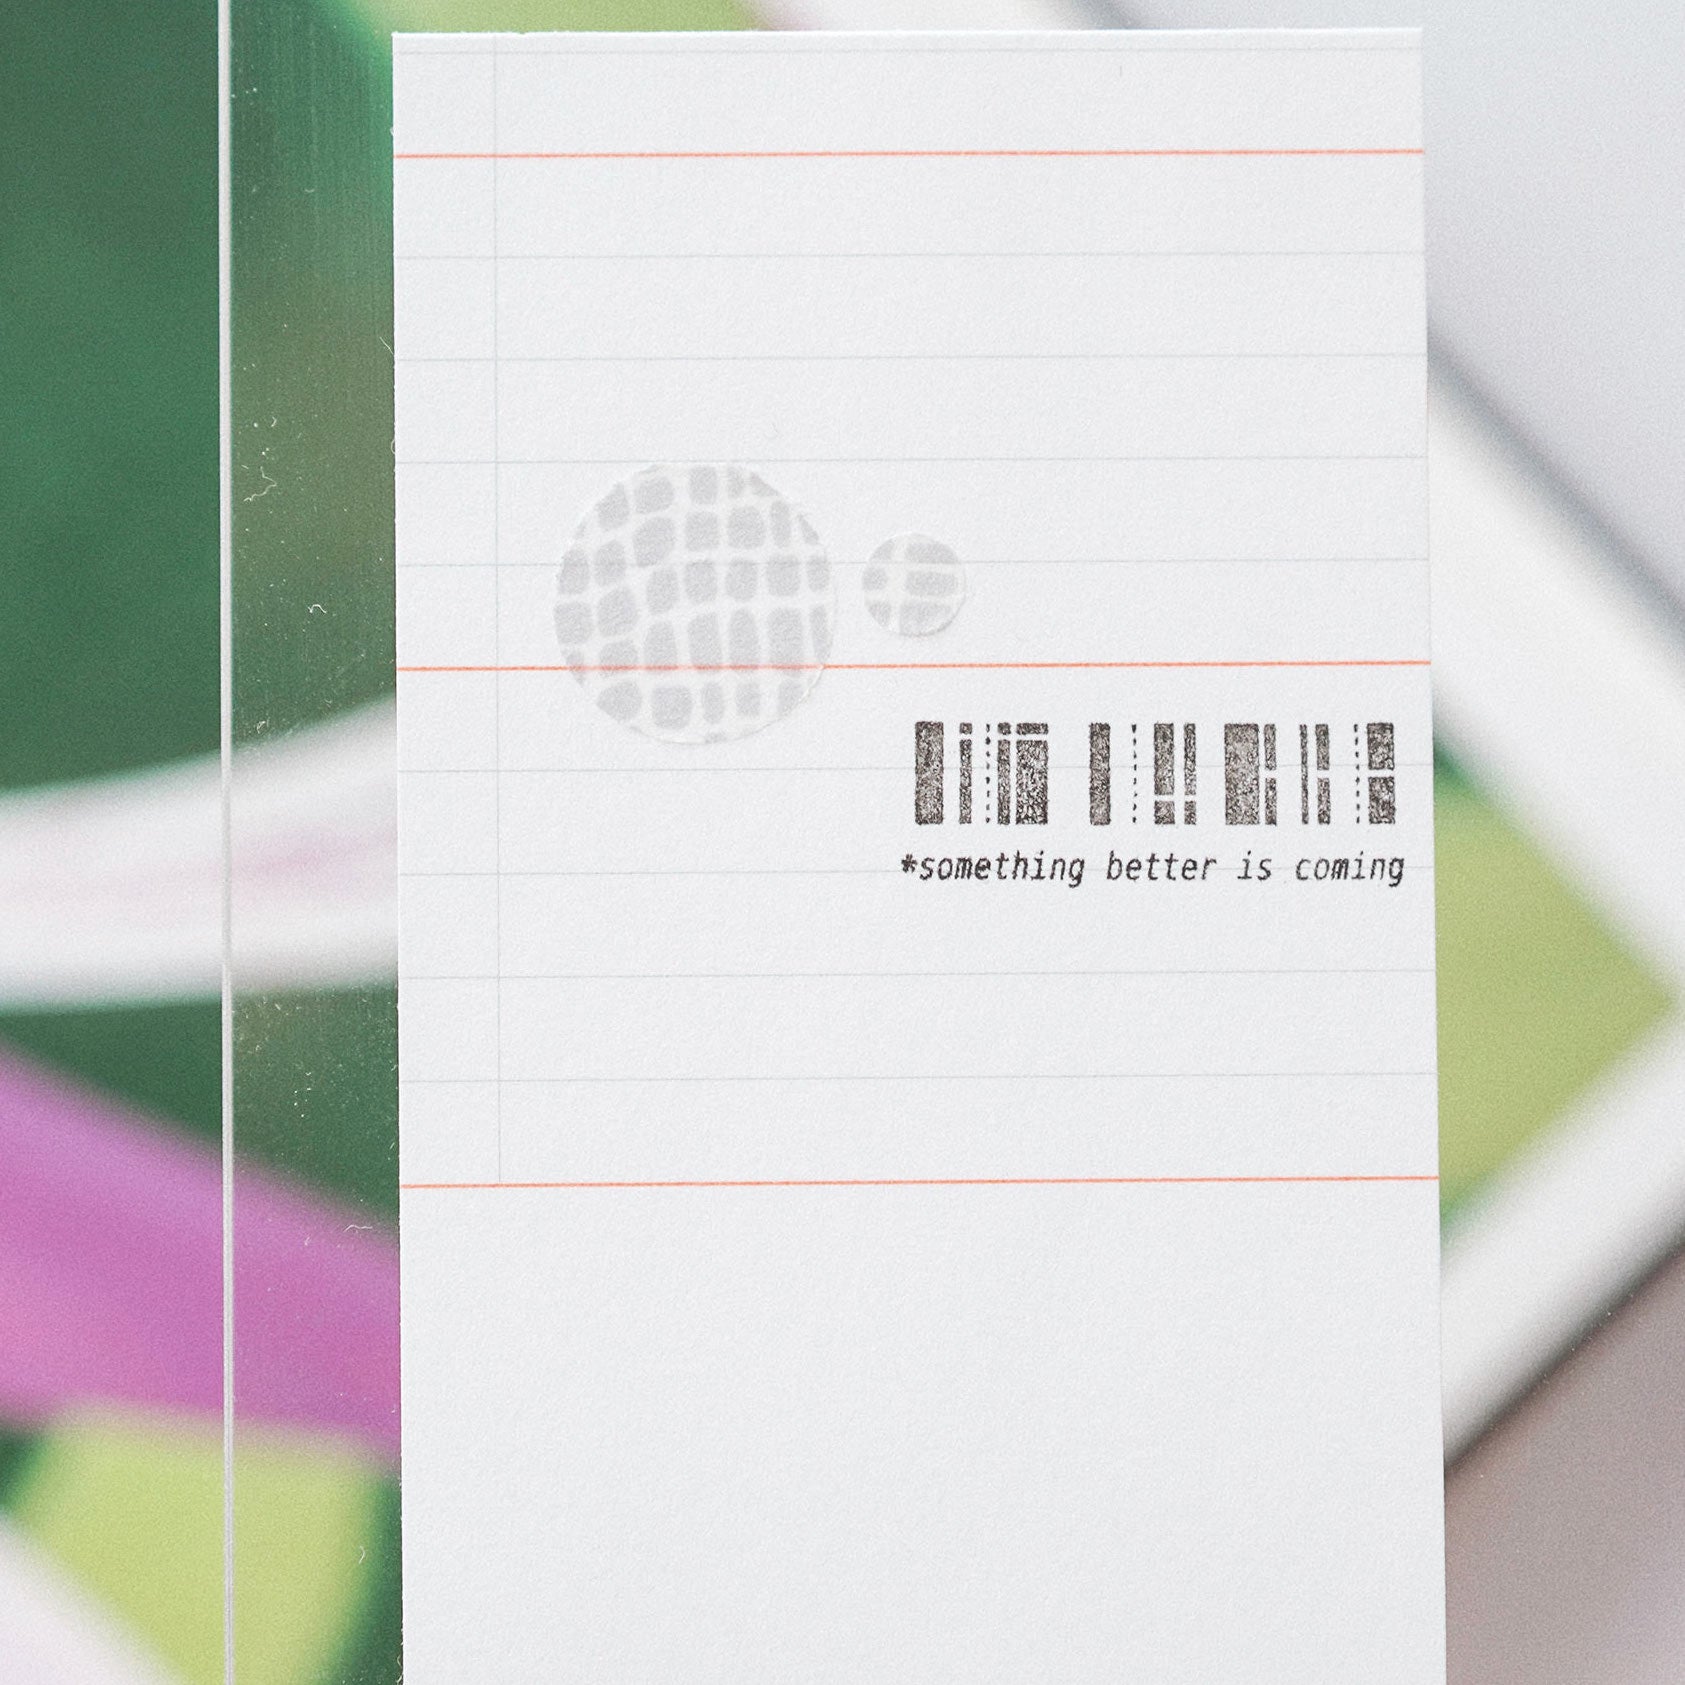 PeHo Design Rubber Stamp - Barcode 条形码